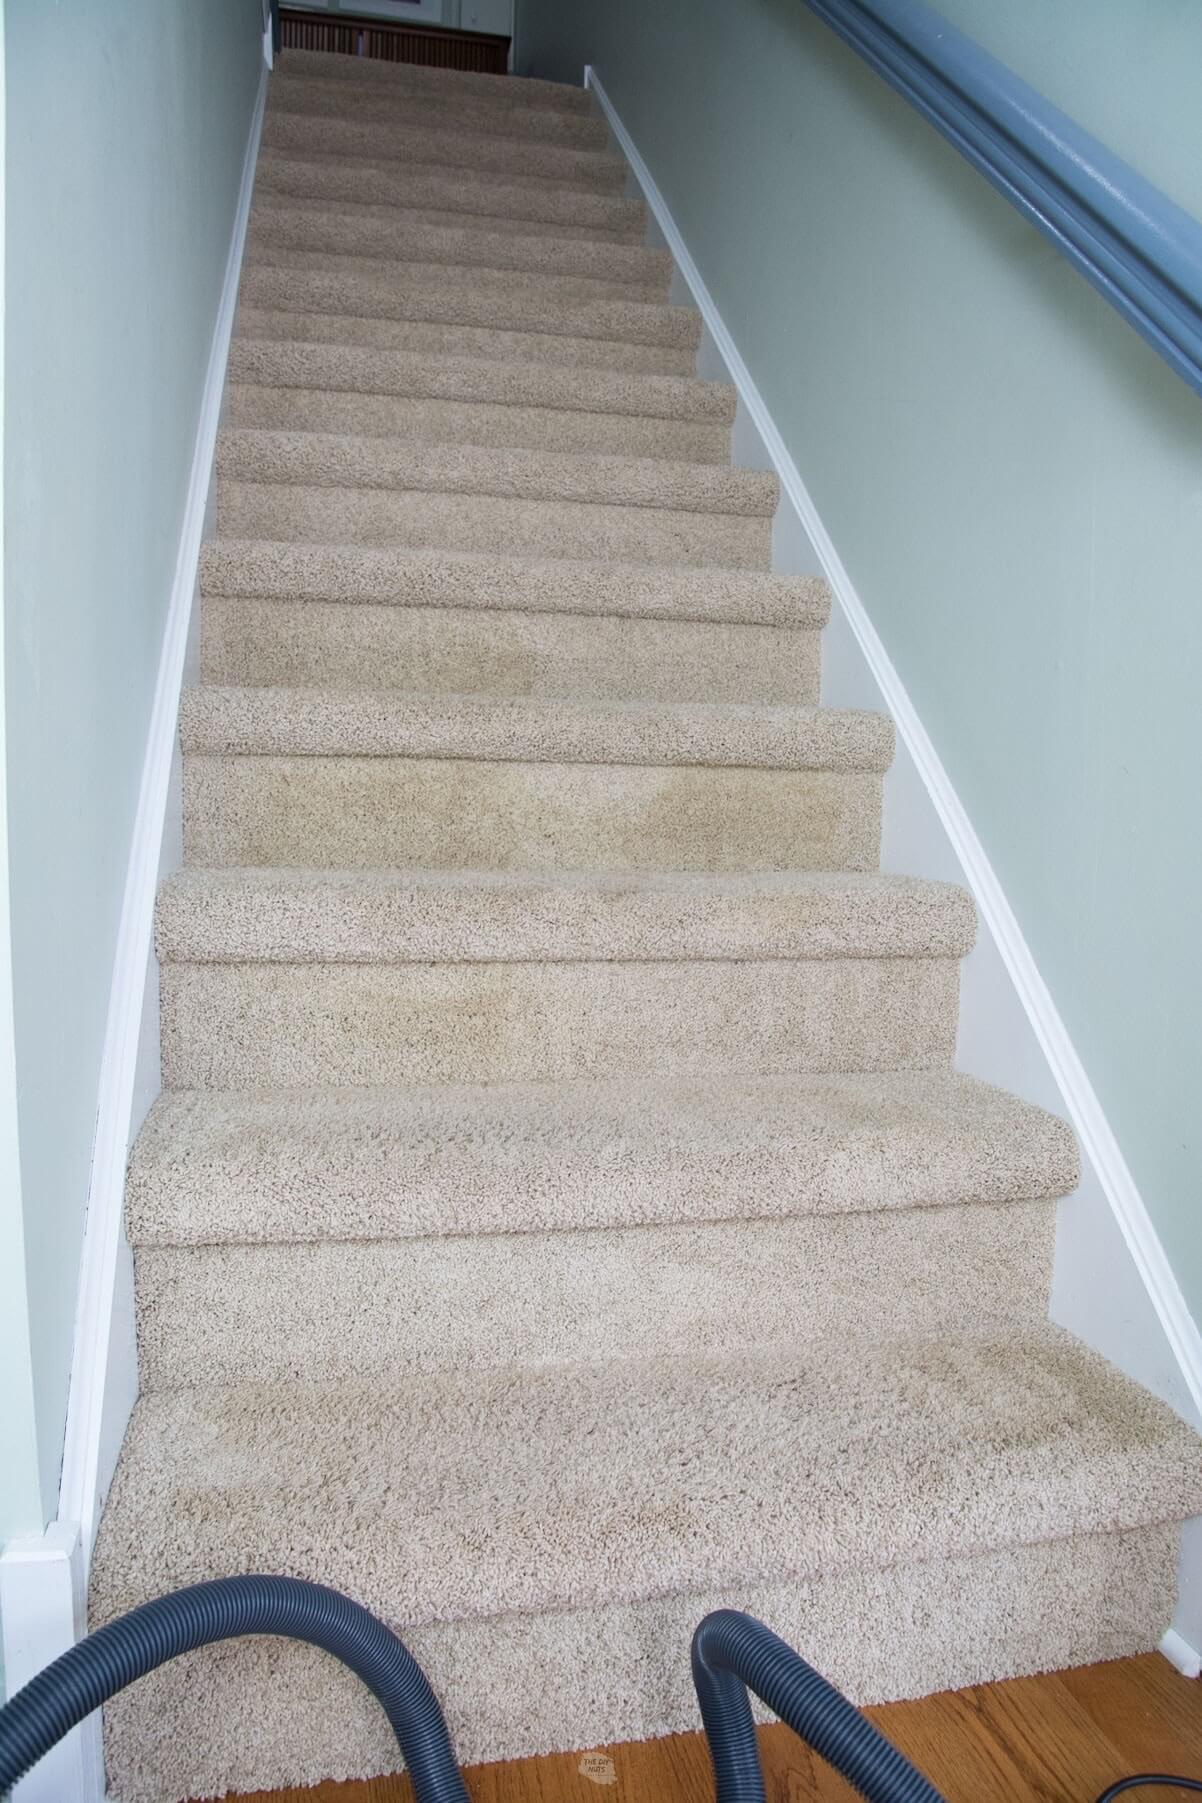 cleaned carpet on stairway.